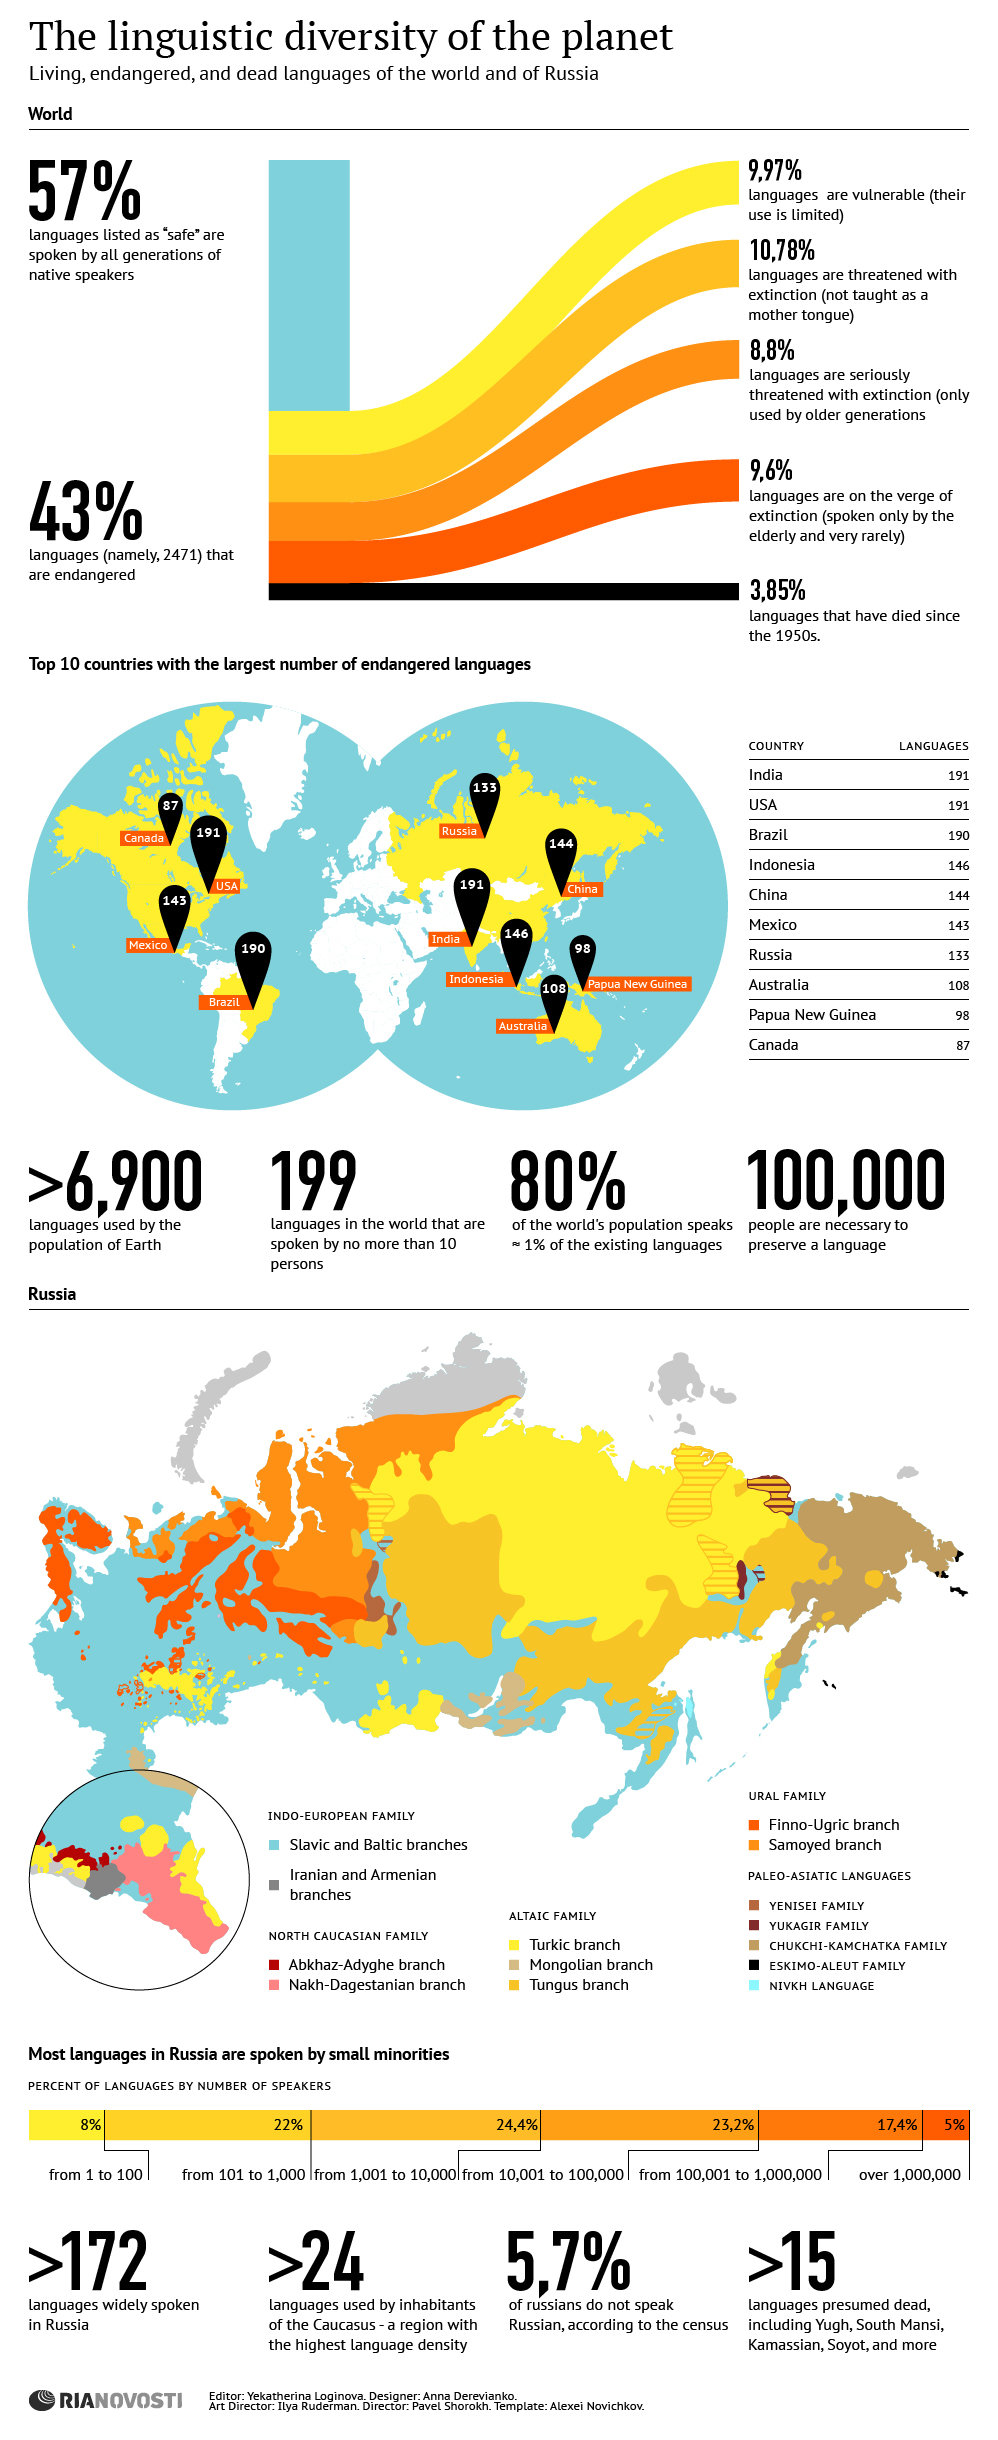 The Linguistic Diversity of the Planet - Sputnik International